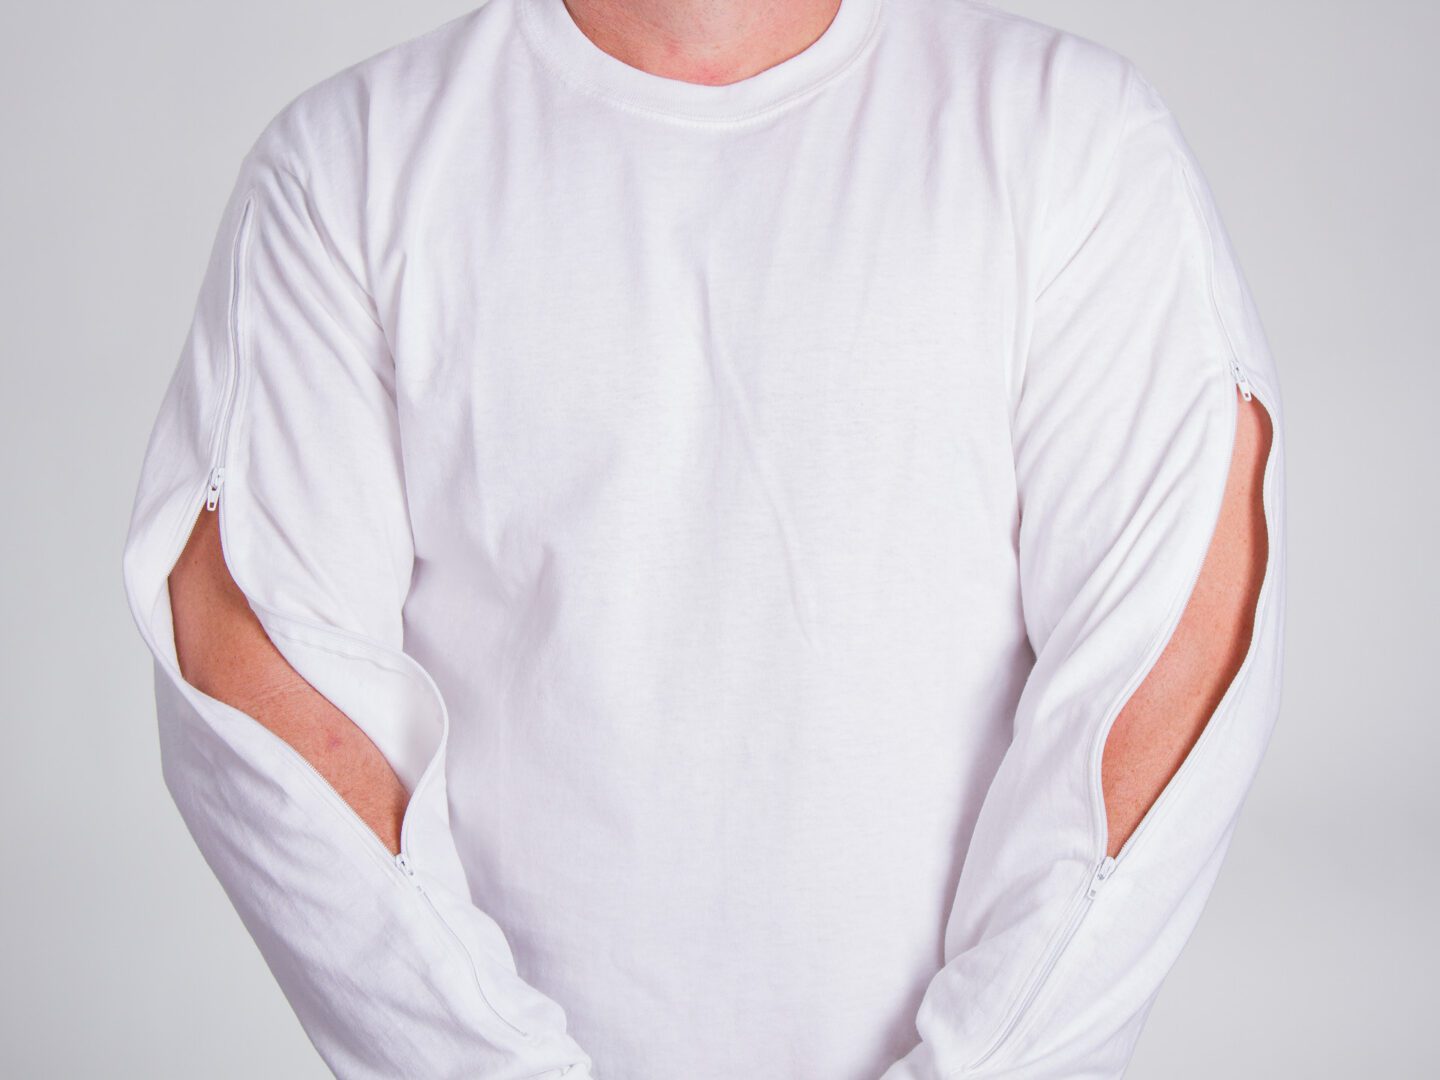 Gildan Ultra Cotton Long Sleeve T-Shirt - 2400 - White - L by Clothing Shop Online